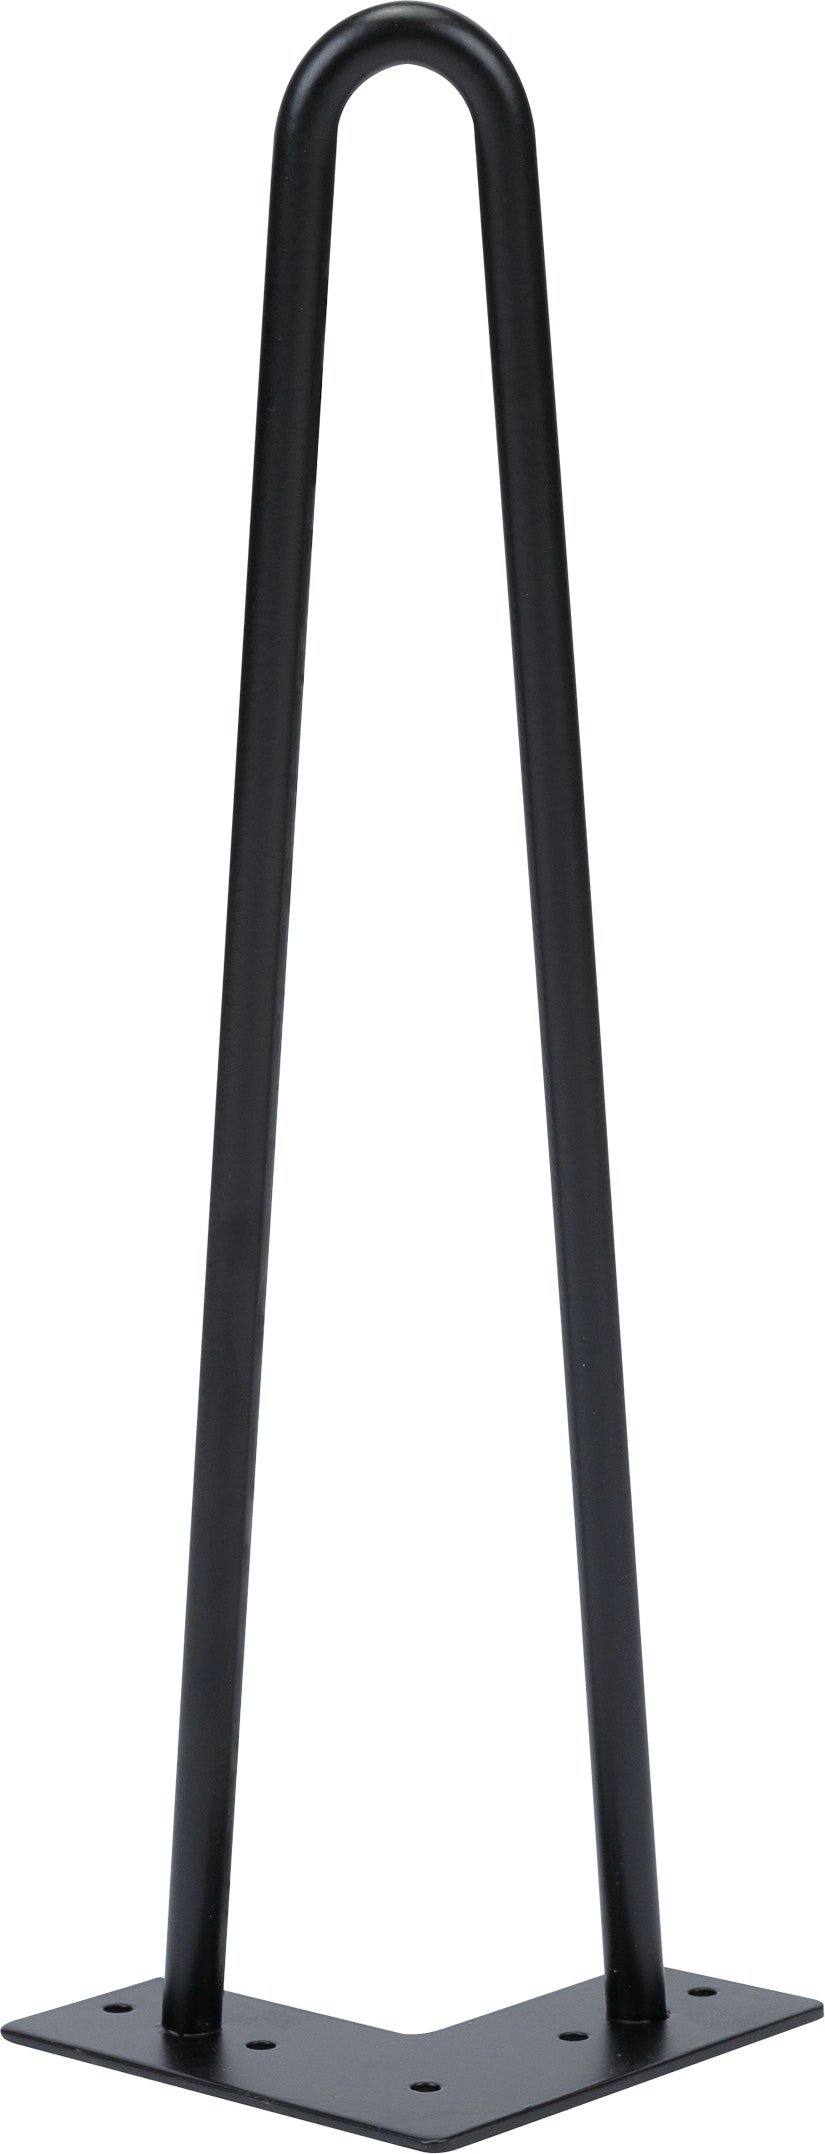 Elias, 2-rods hairpin-bordben til sofabord/bænk, Ø1, 2 cm by Nielsen Design (H: 41.5 cm. B: 10 cm., Sort)